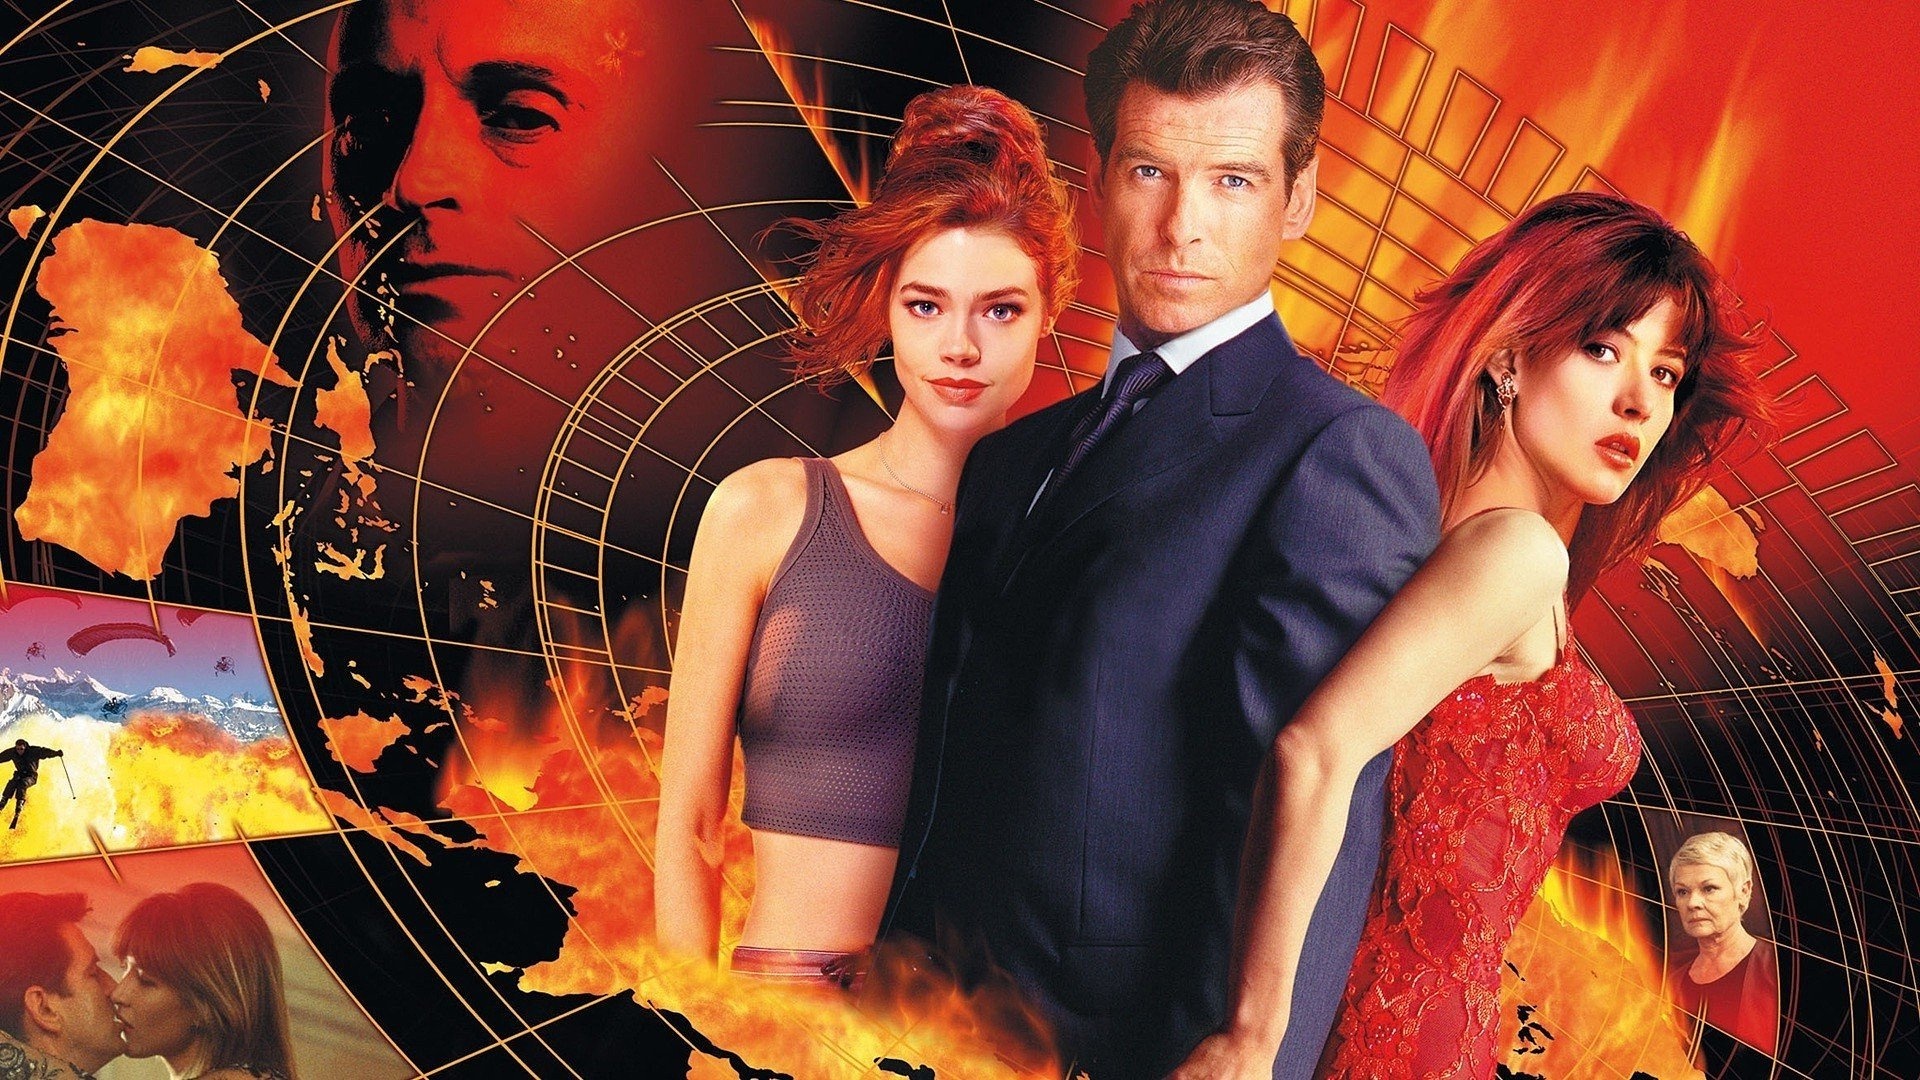 James Bond movie, HD wallpapers, Stylish backgrounds, 007, 1920x1080 Full HD Desktop